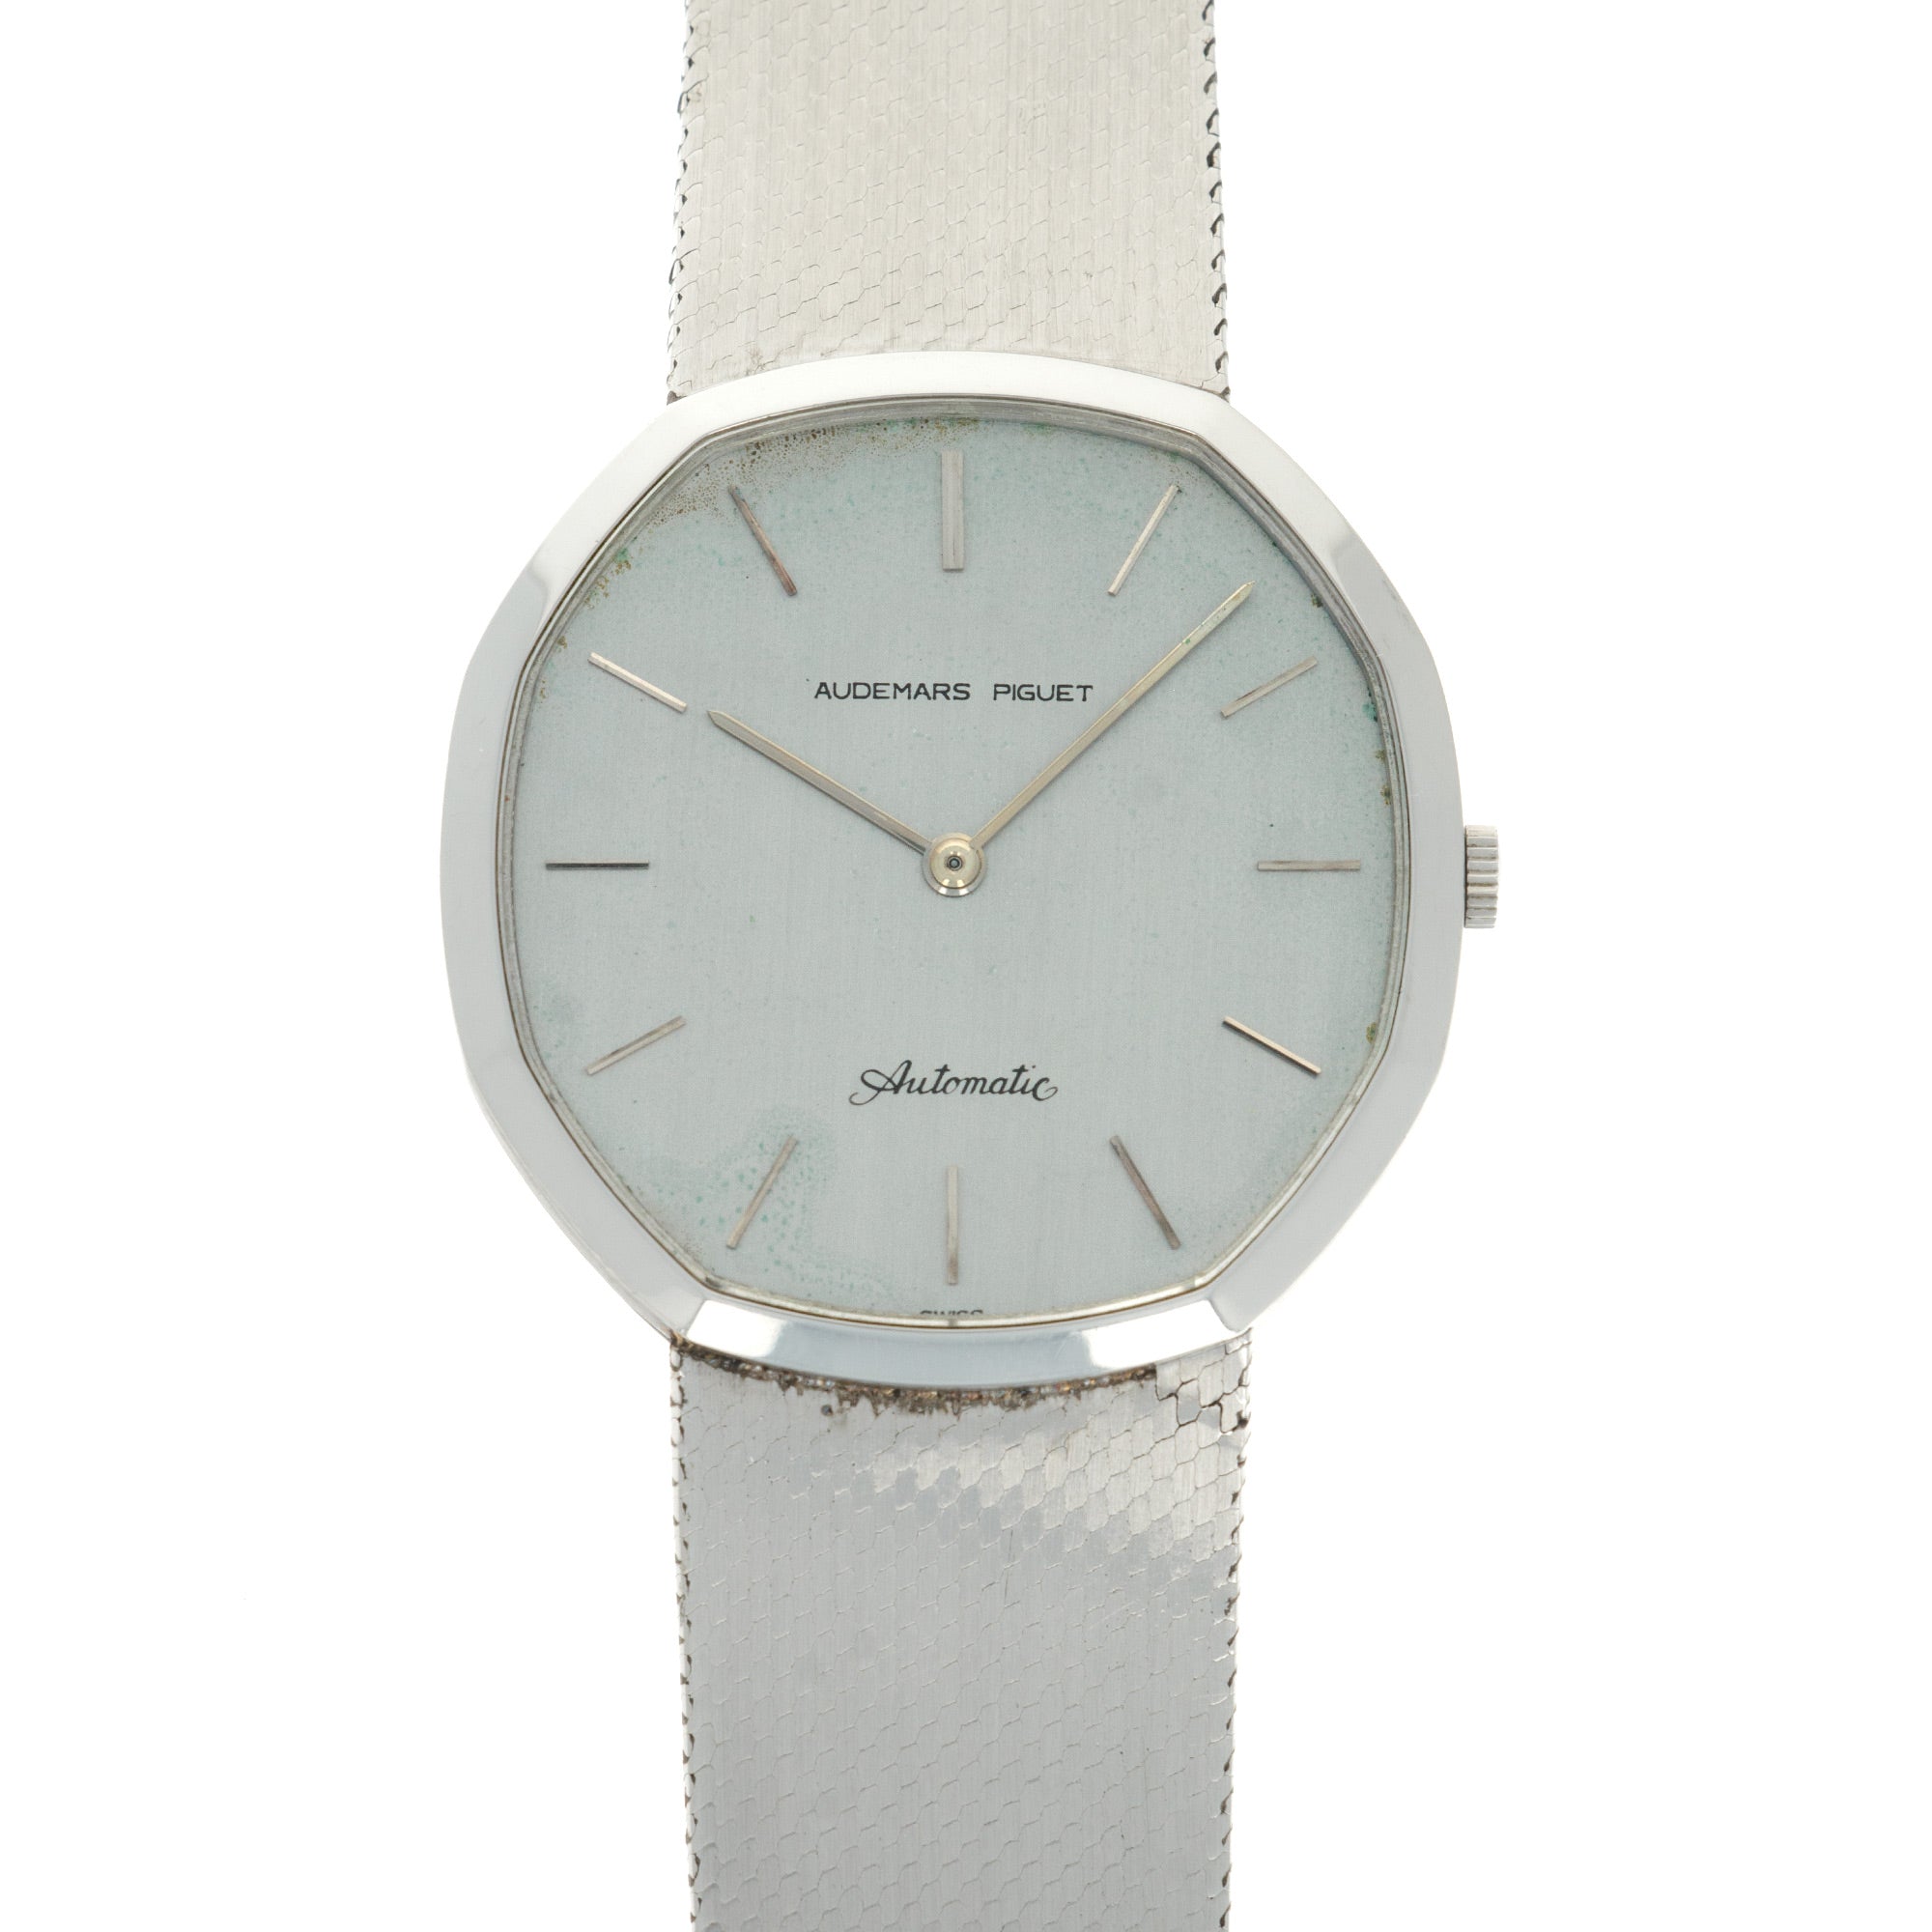 Audemars Piguet - Audemars Piguet Steel Automatic Bracelet Watch, 1970s - The Keystone Watches